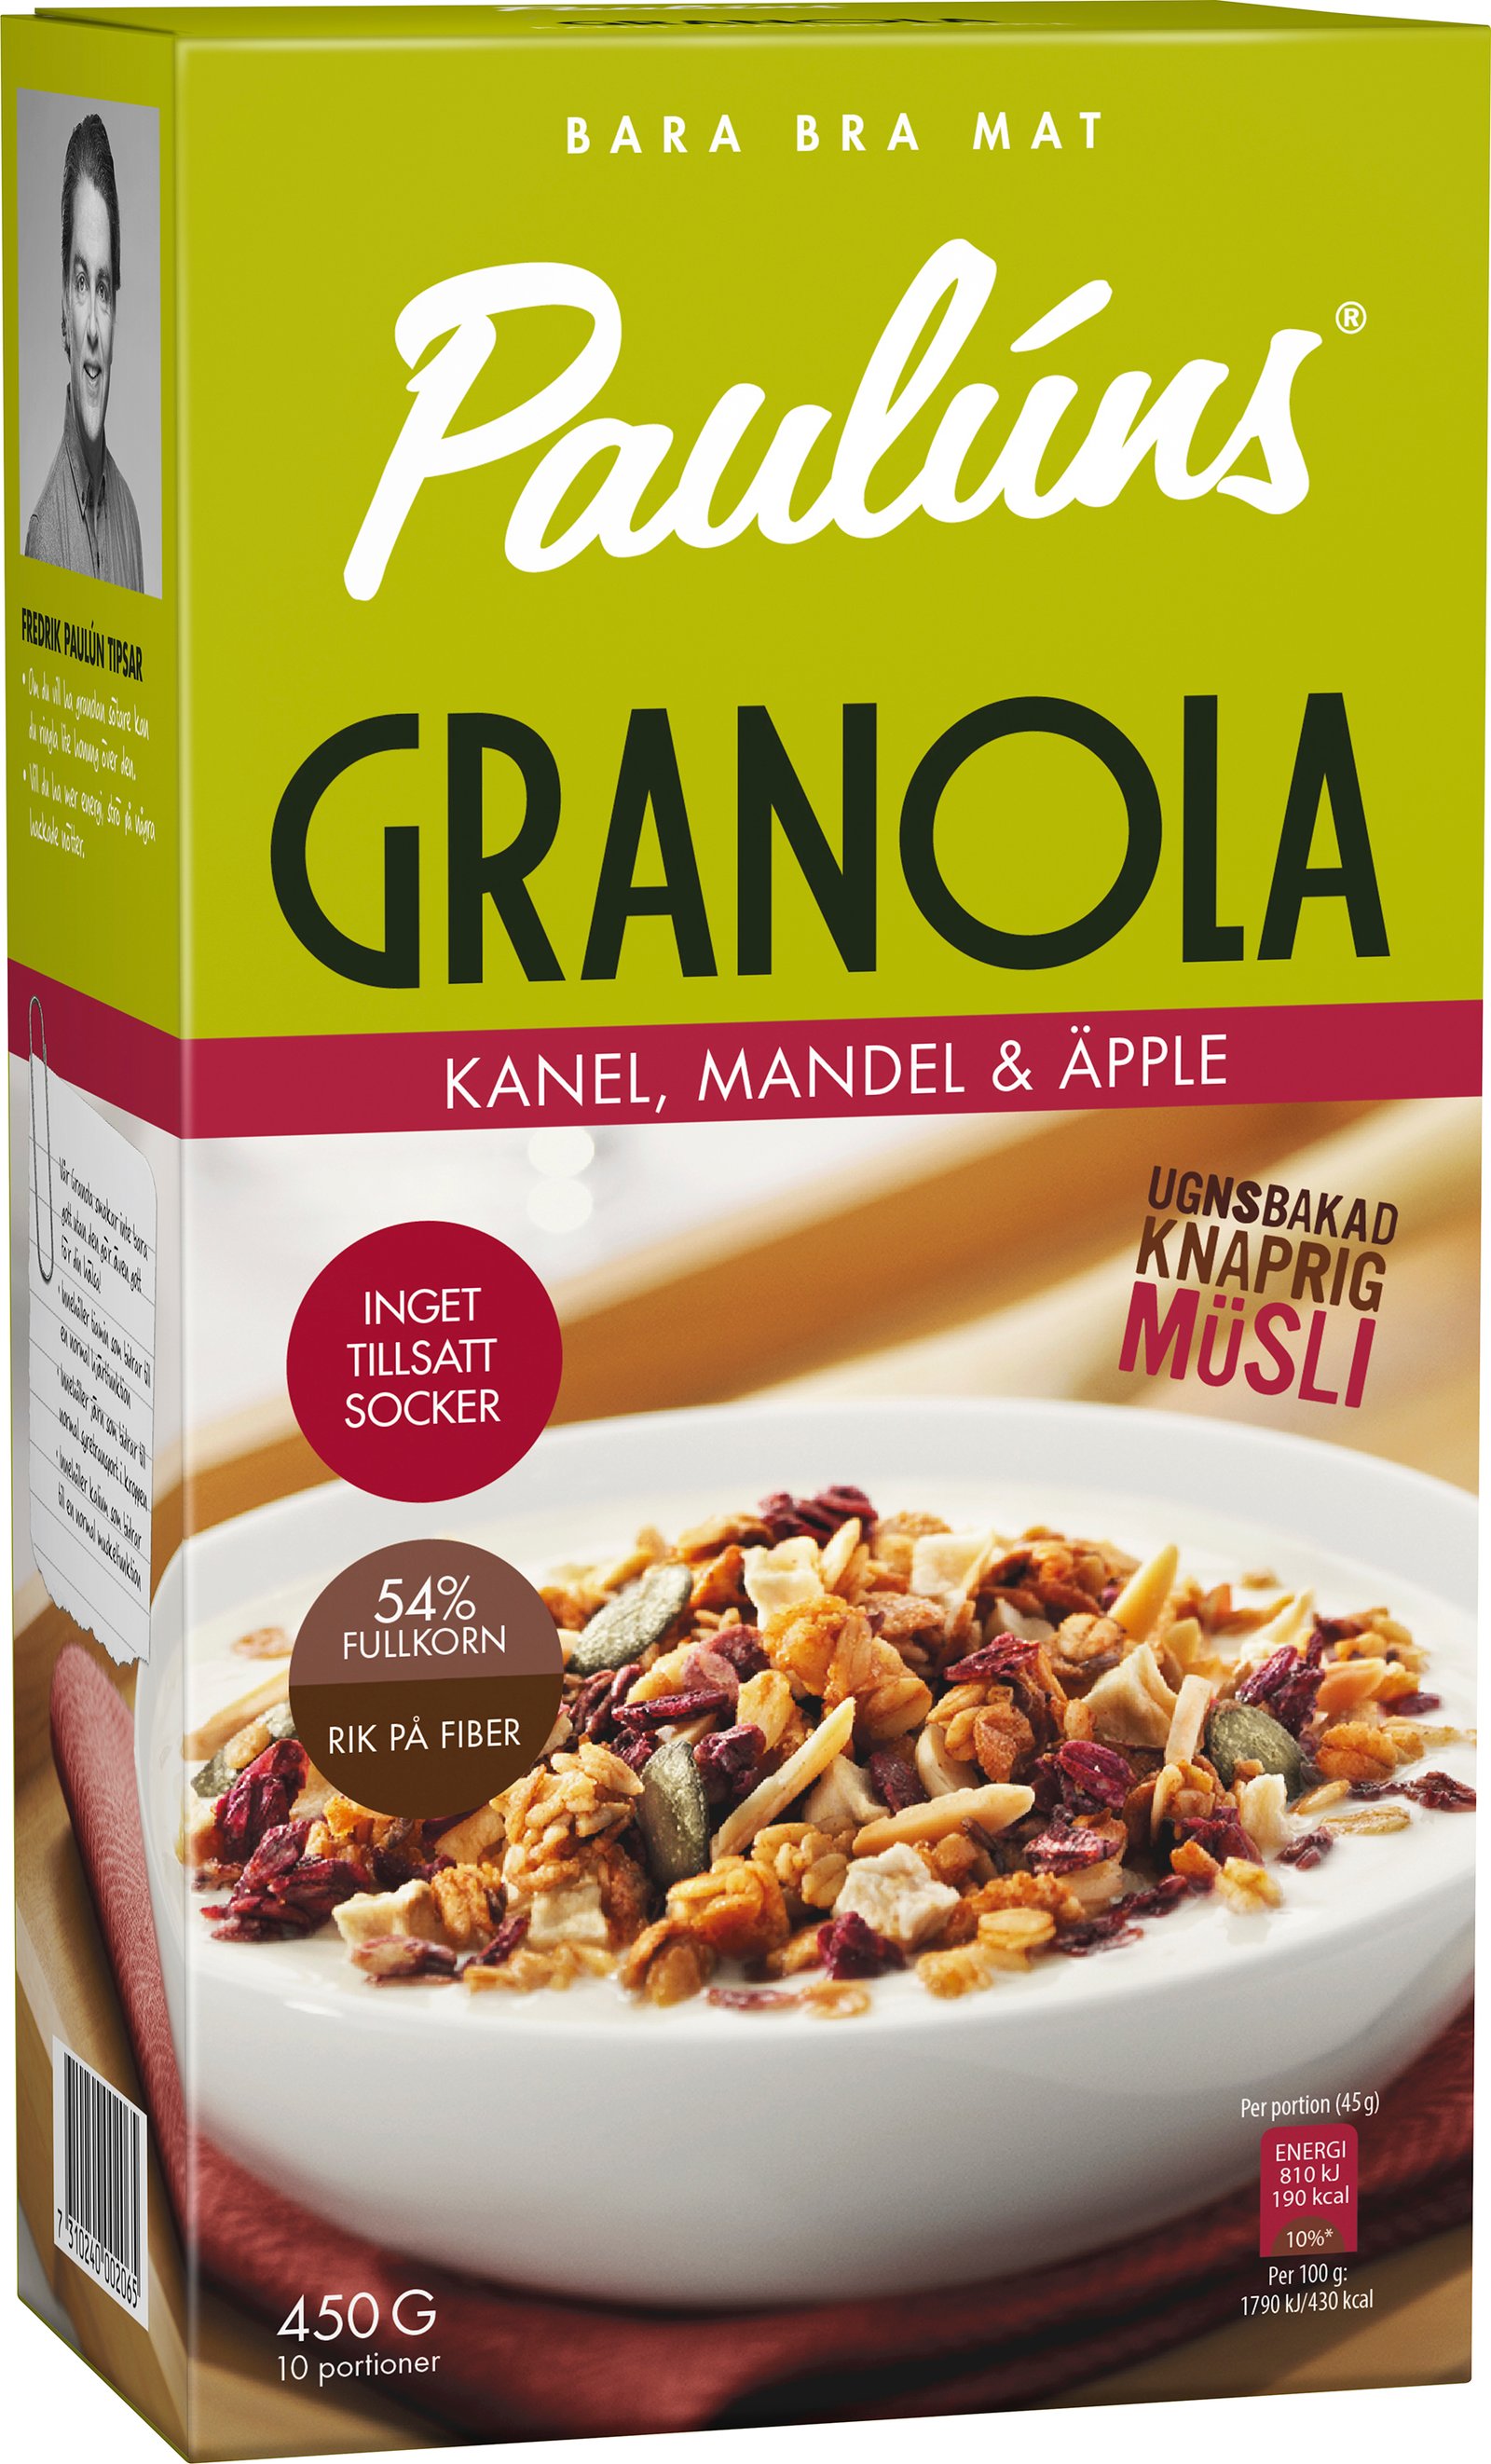 Paulúns Granola Kanel Mandel Äpple 450 g